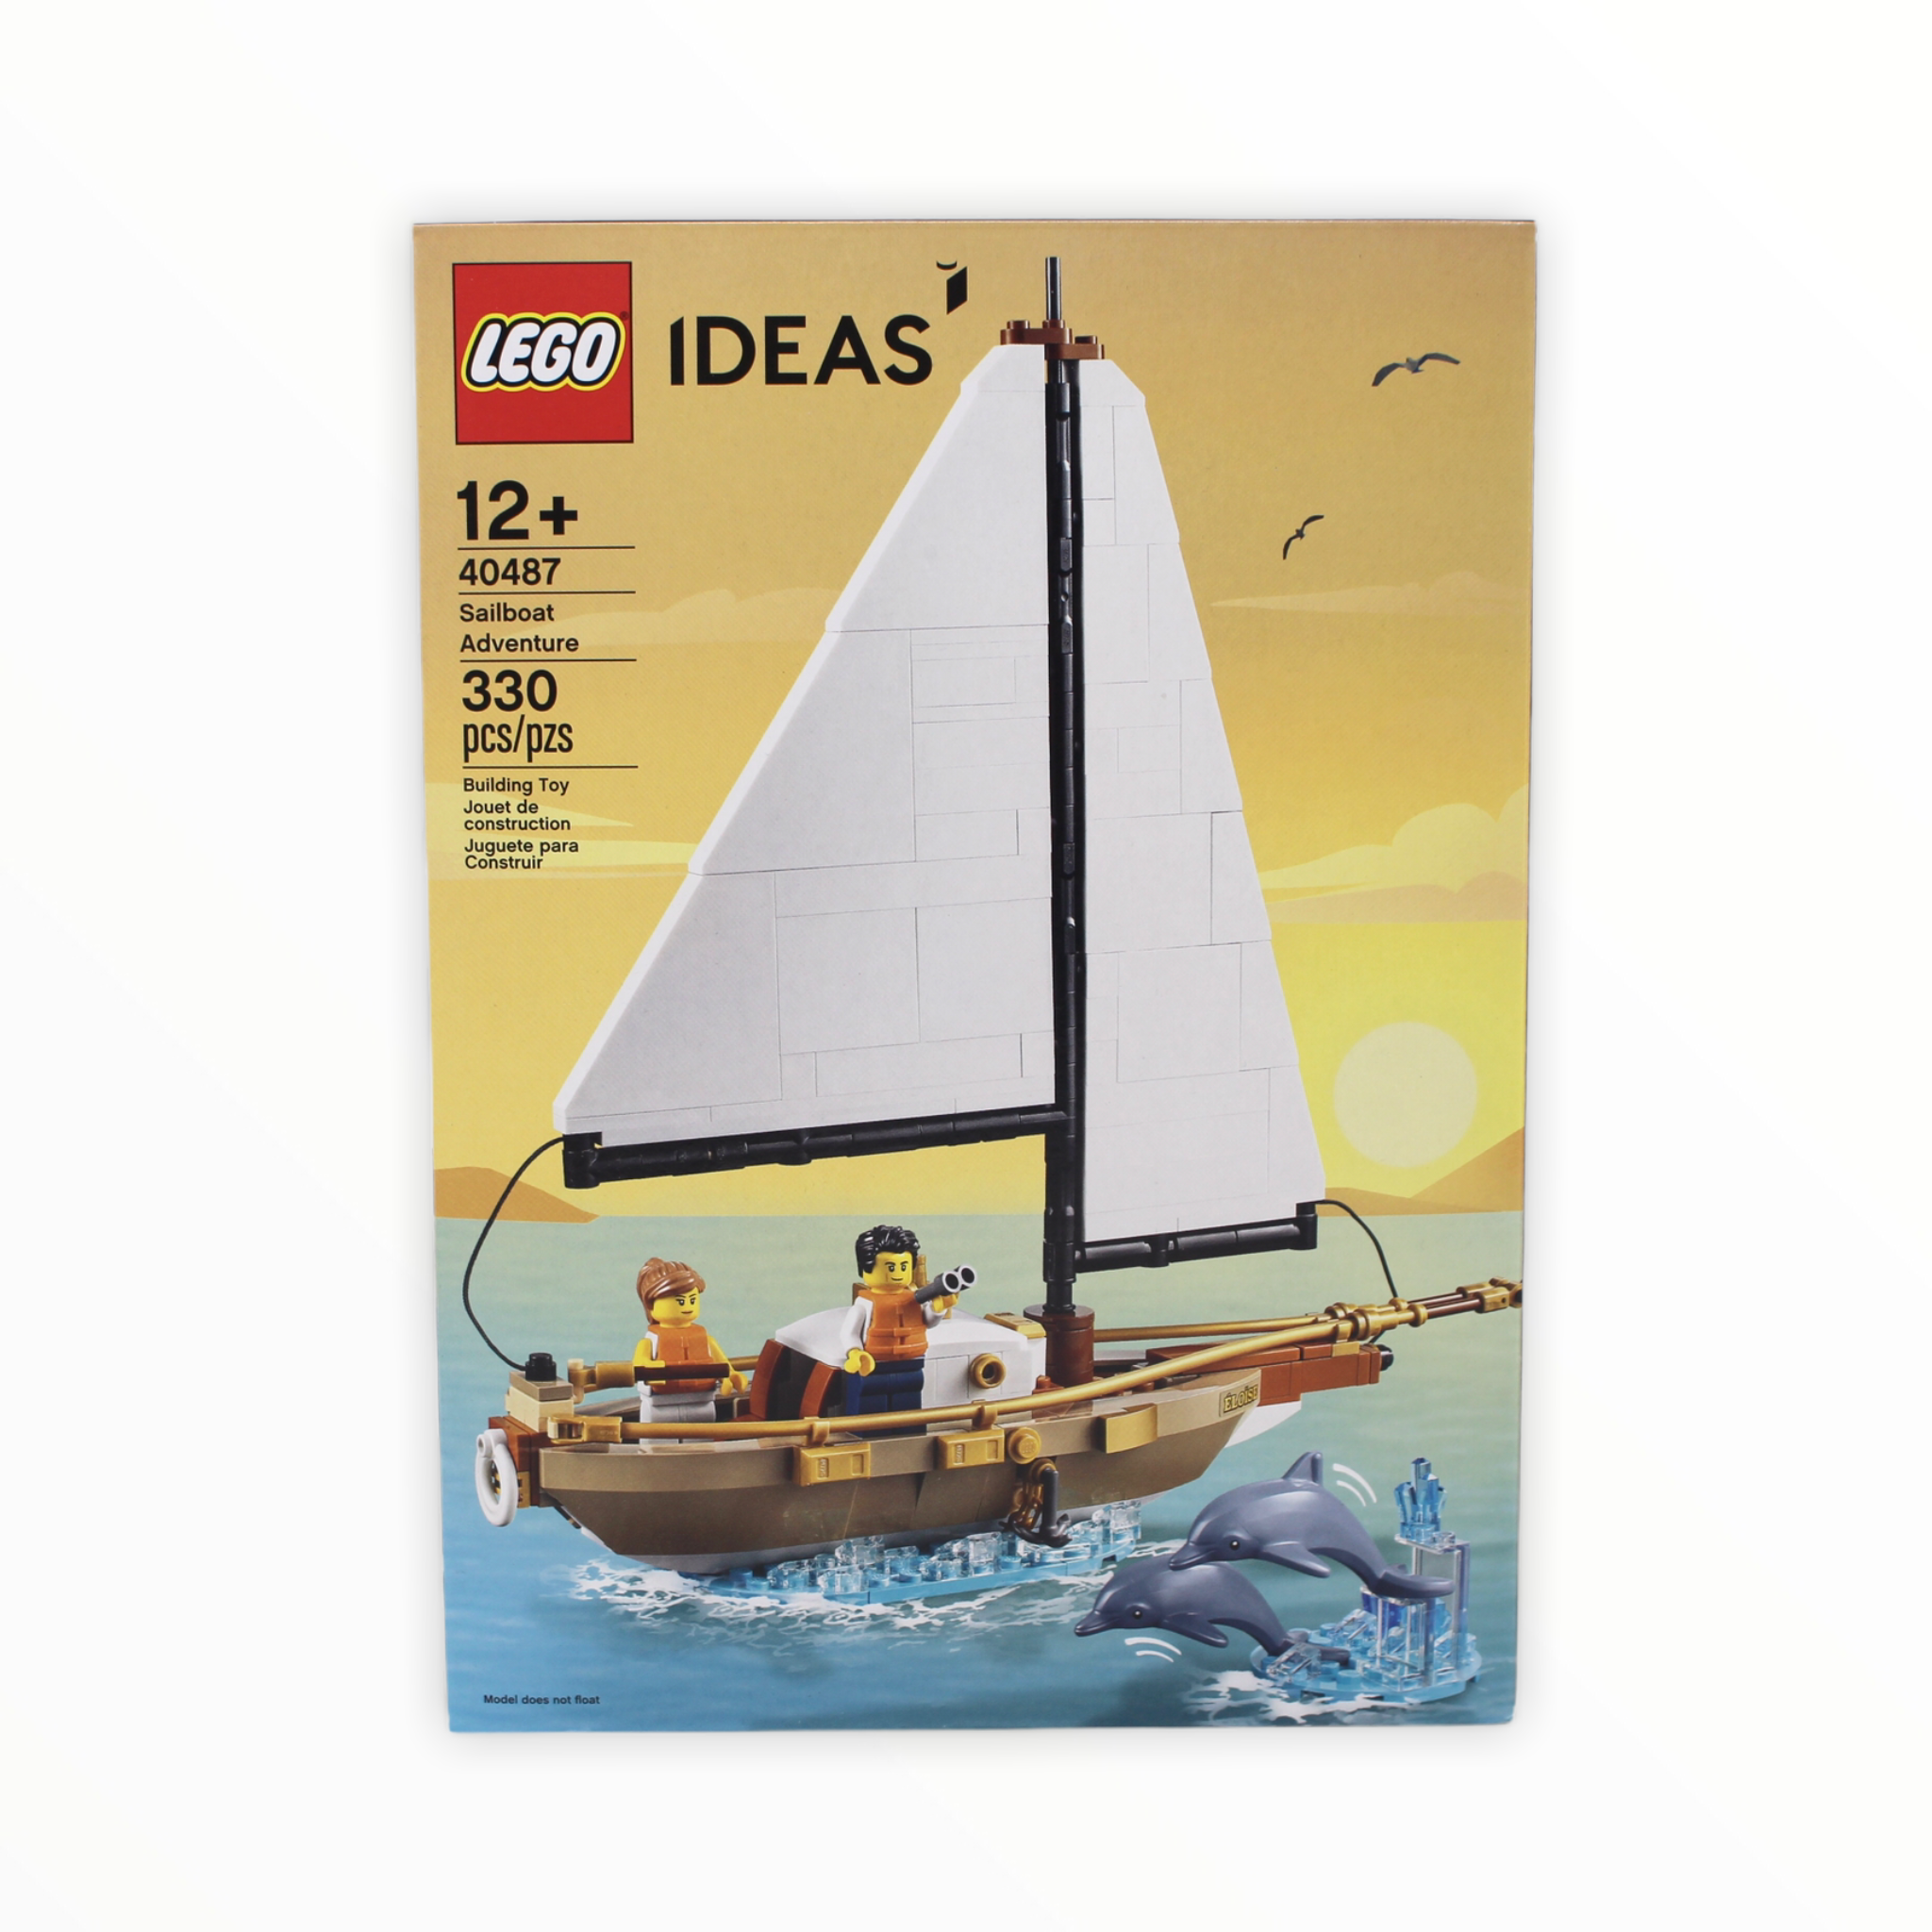 Retired Set 40487 LEGO Ideas Sailboat Adventure